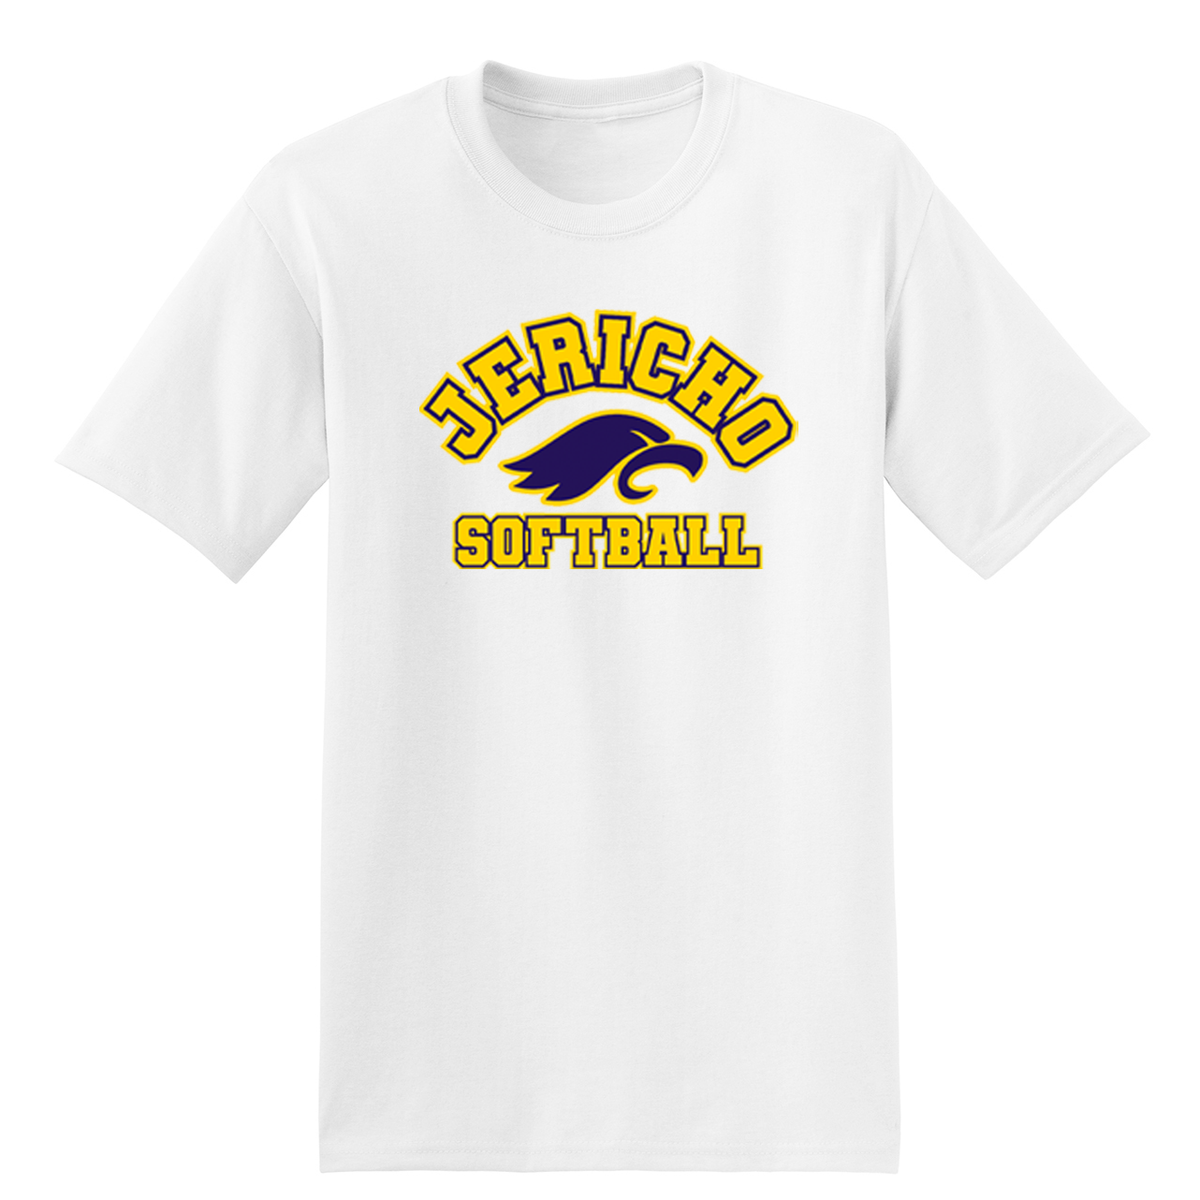 Jericho HS Softball T-Shirt